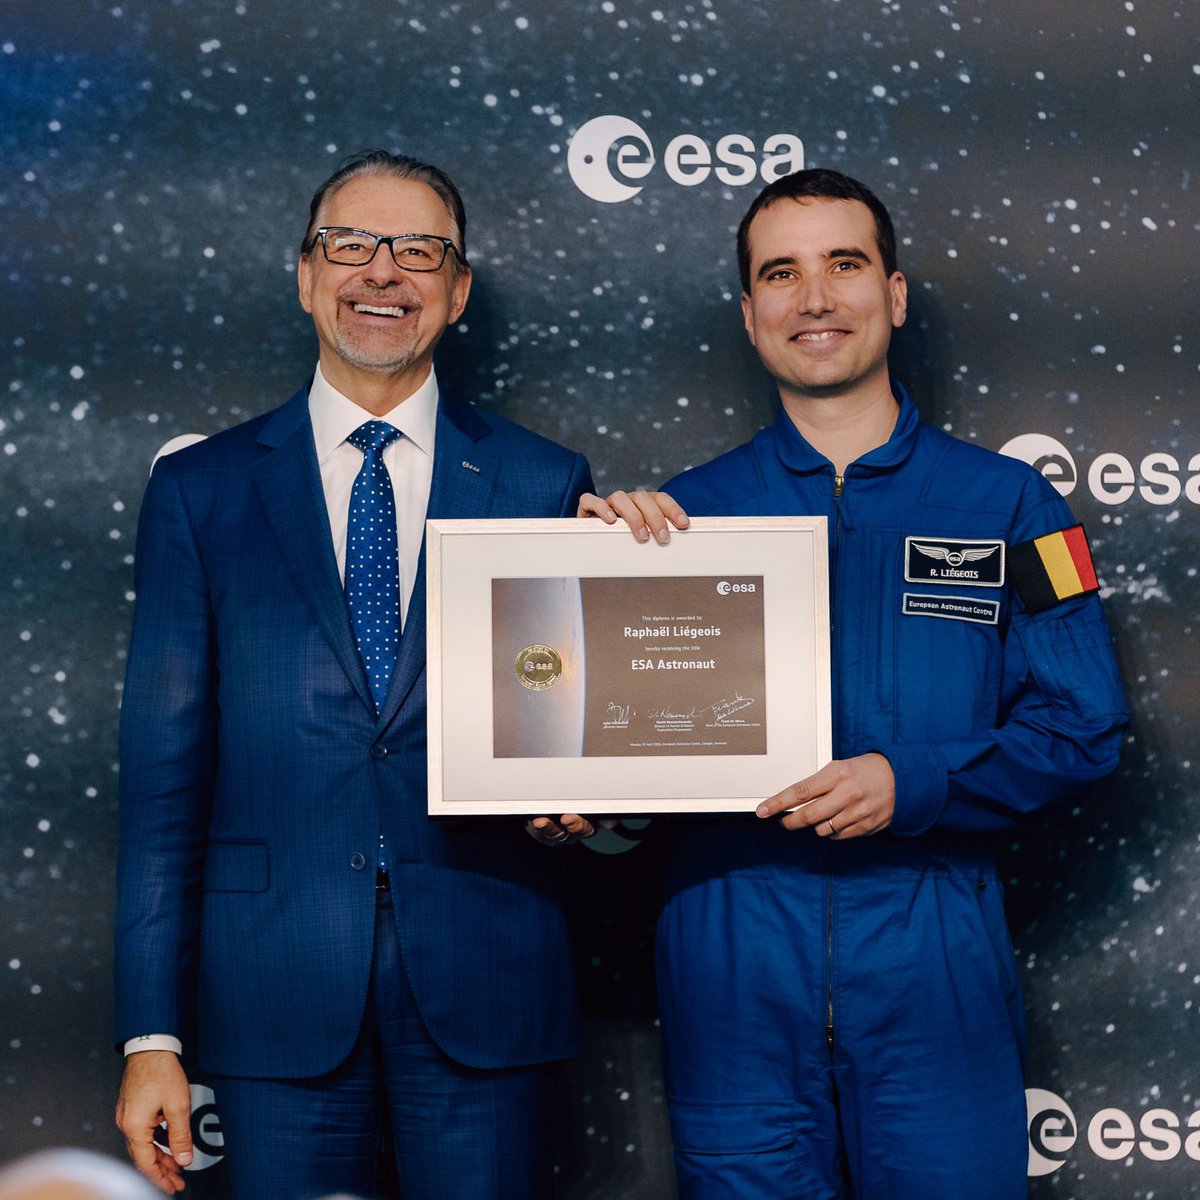 Belgium has a new graduated astronaut 🧑‍🚀 🇧🇪 Congrats @Raph_Astro ! @esa @belspo @AschbacherJosef